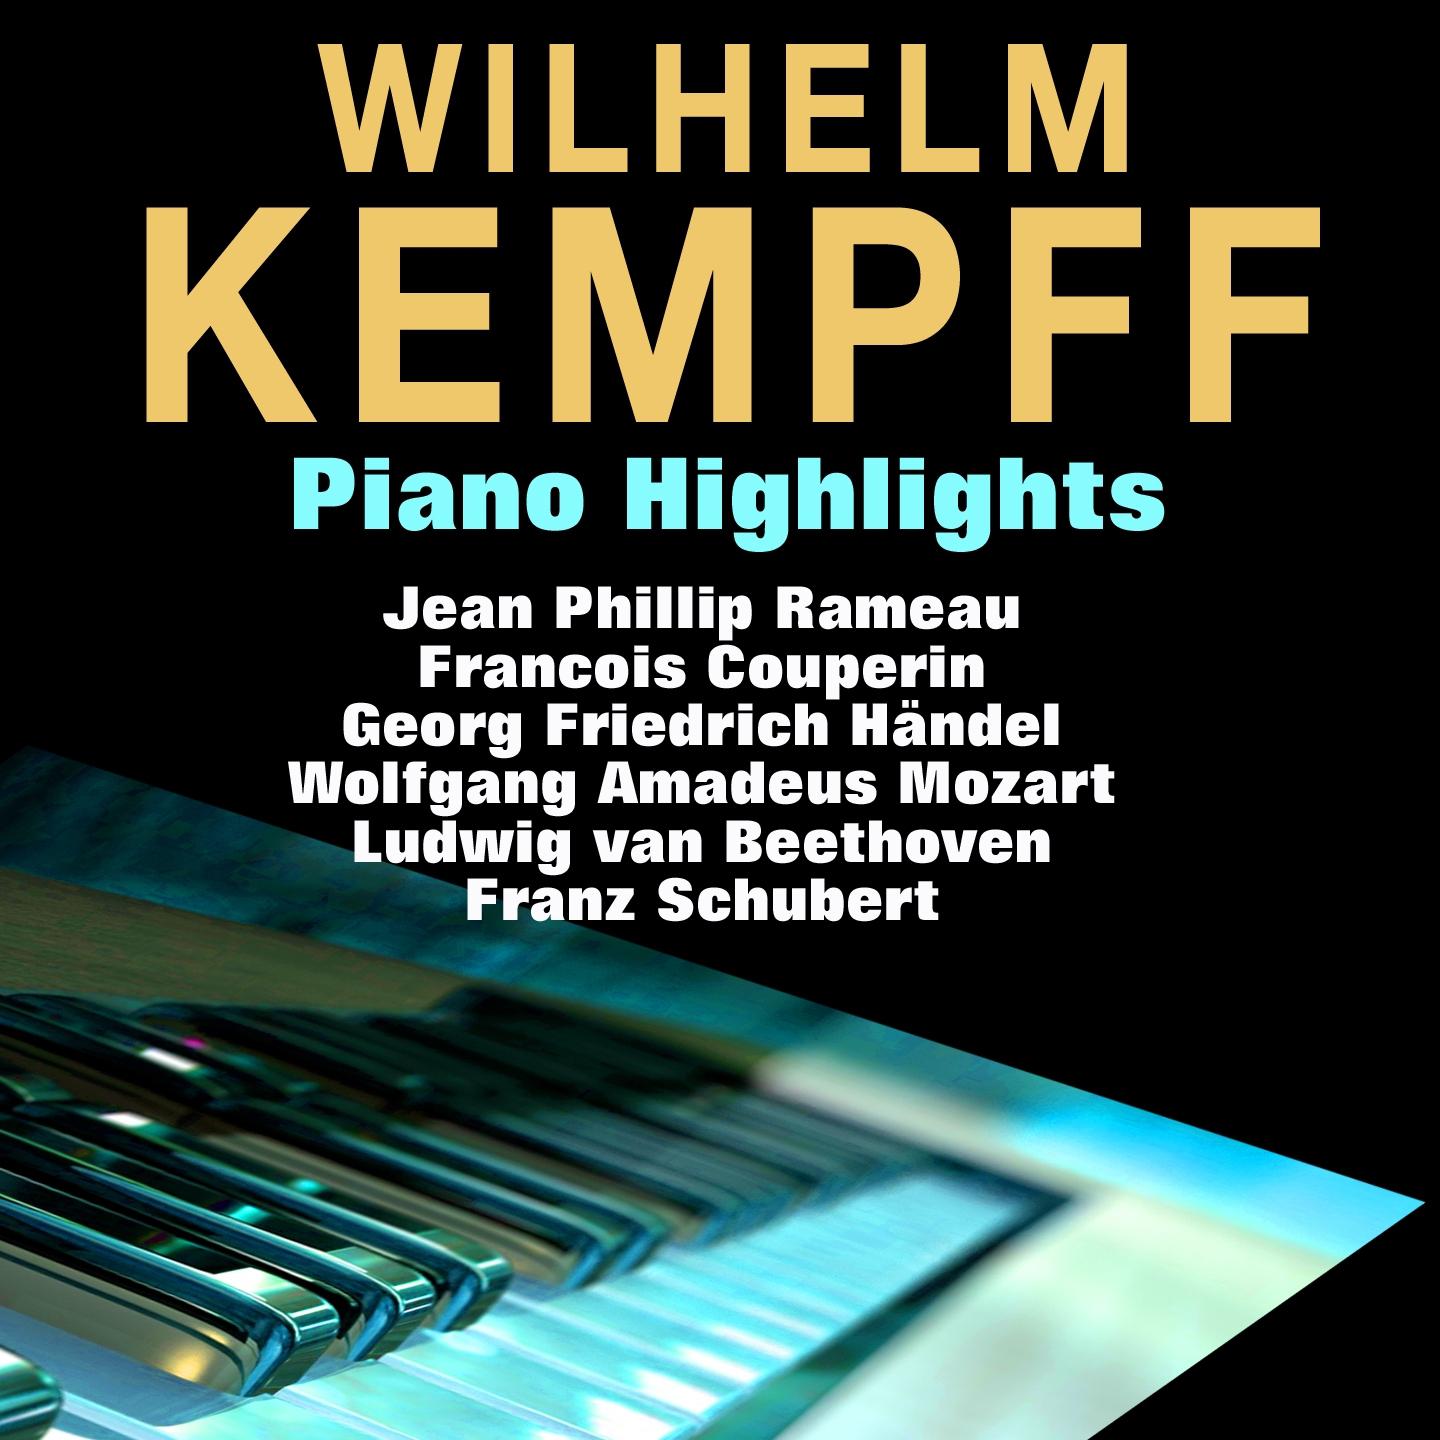 Wilhelm Kempff Piano Highlights